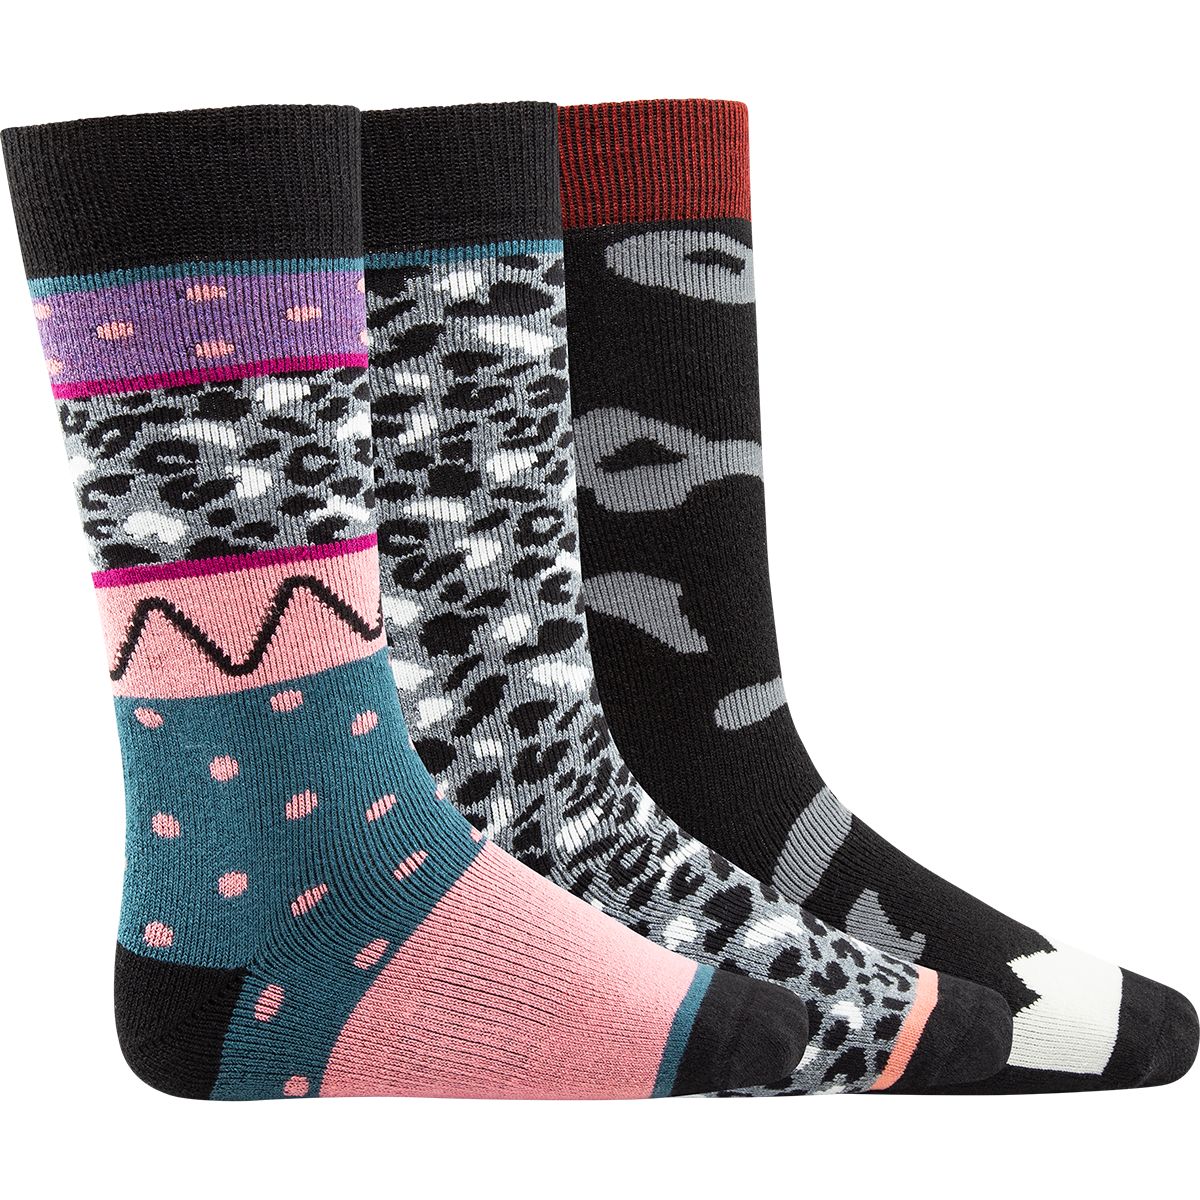 Ripzone Girls' Cozy Socks